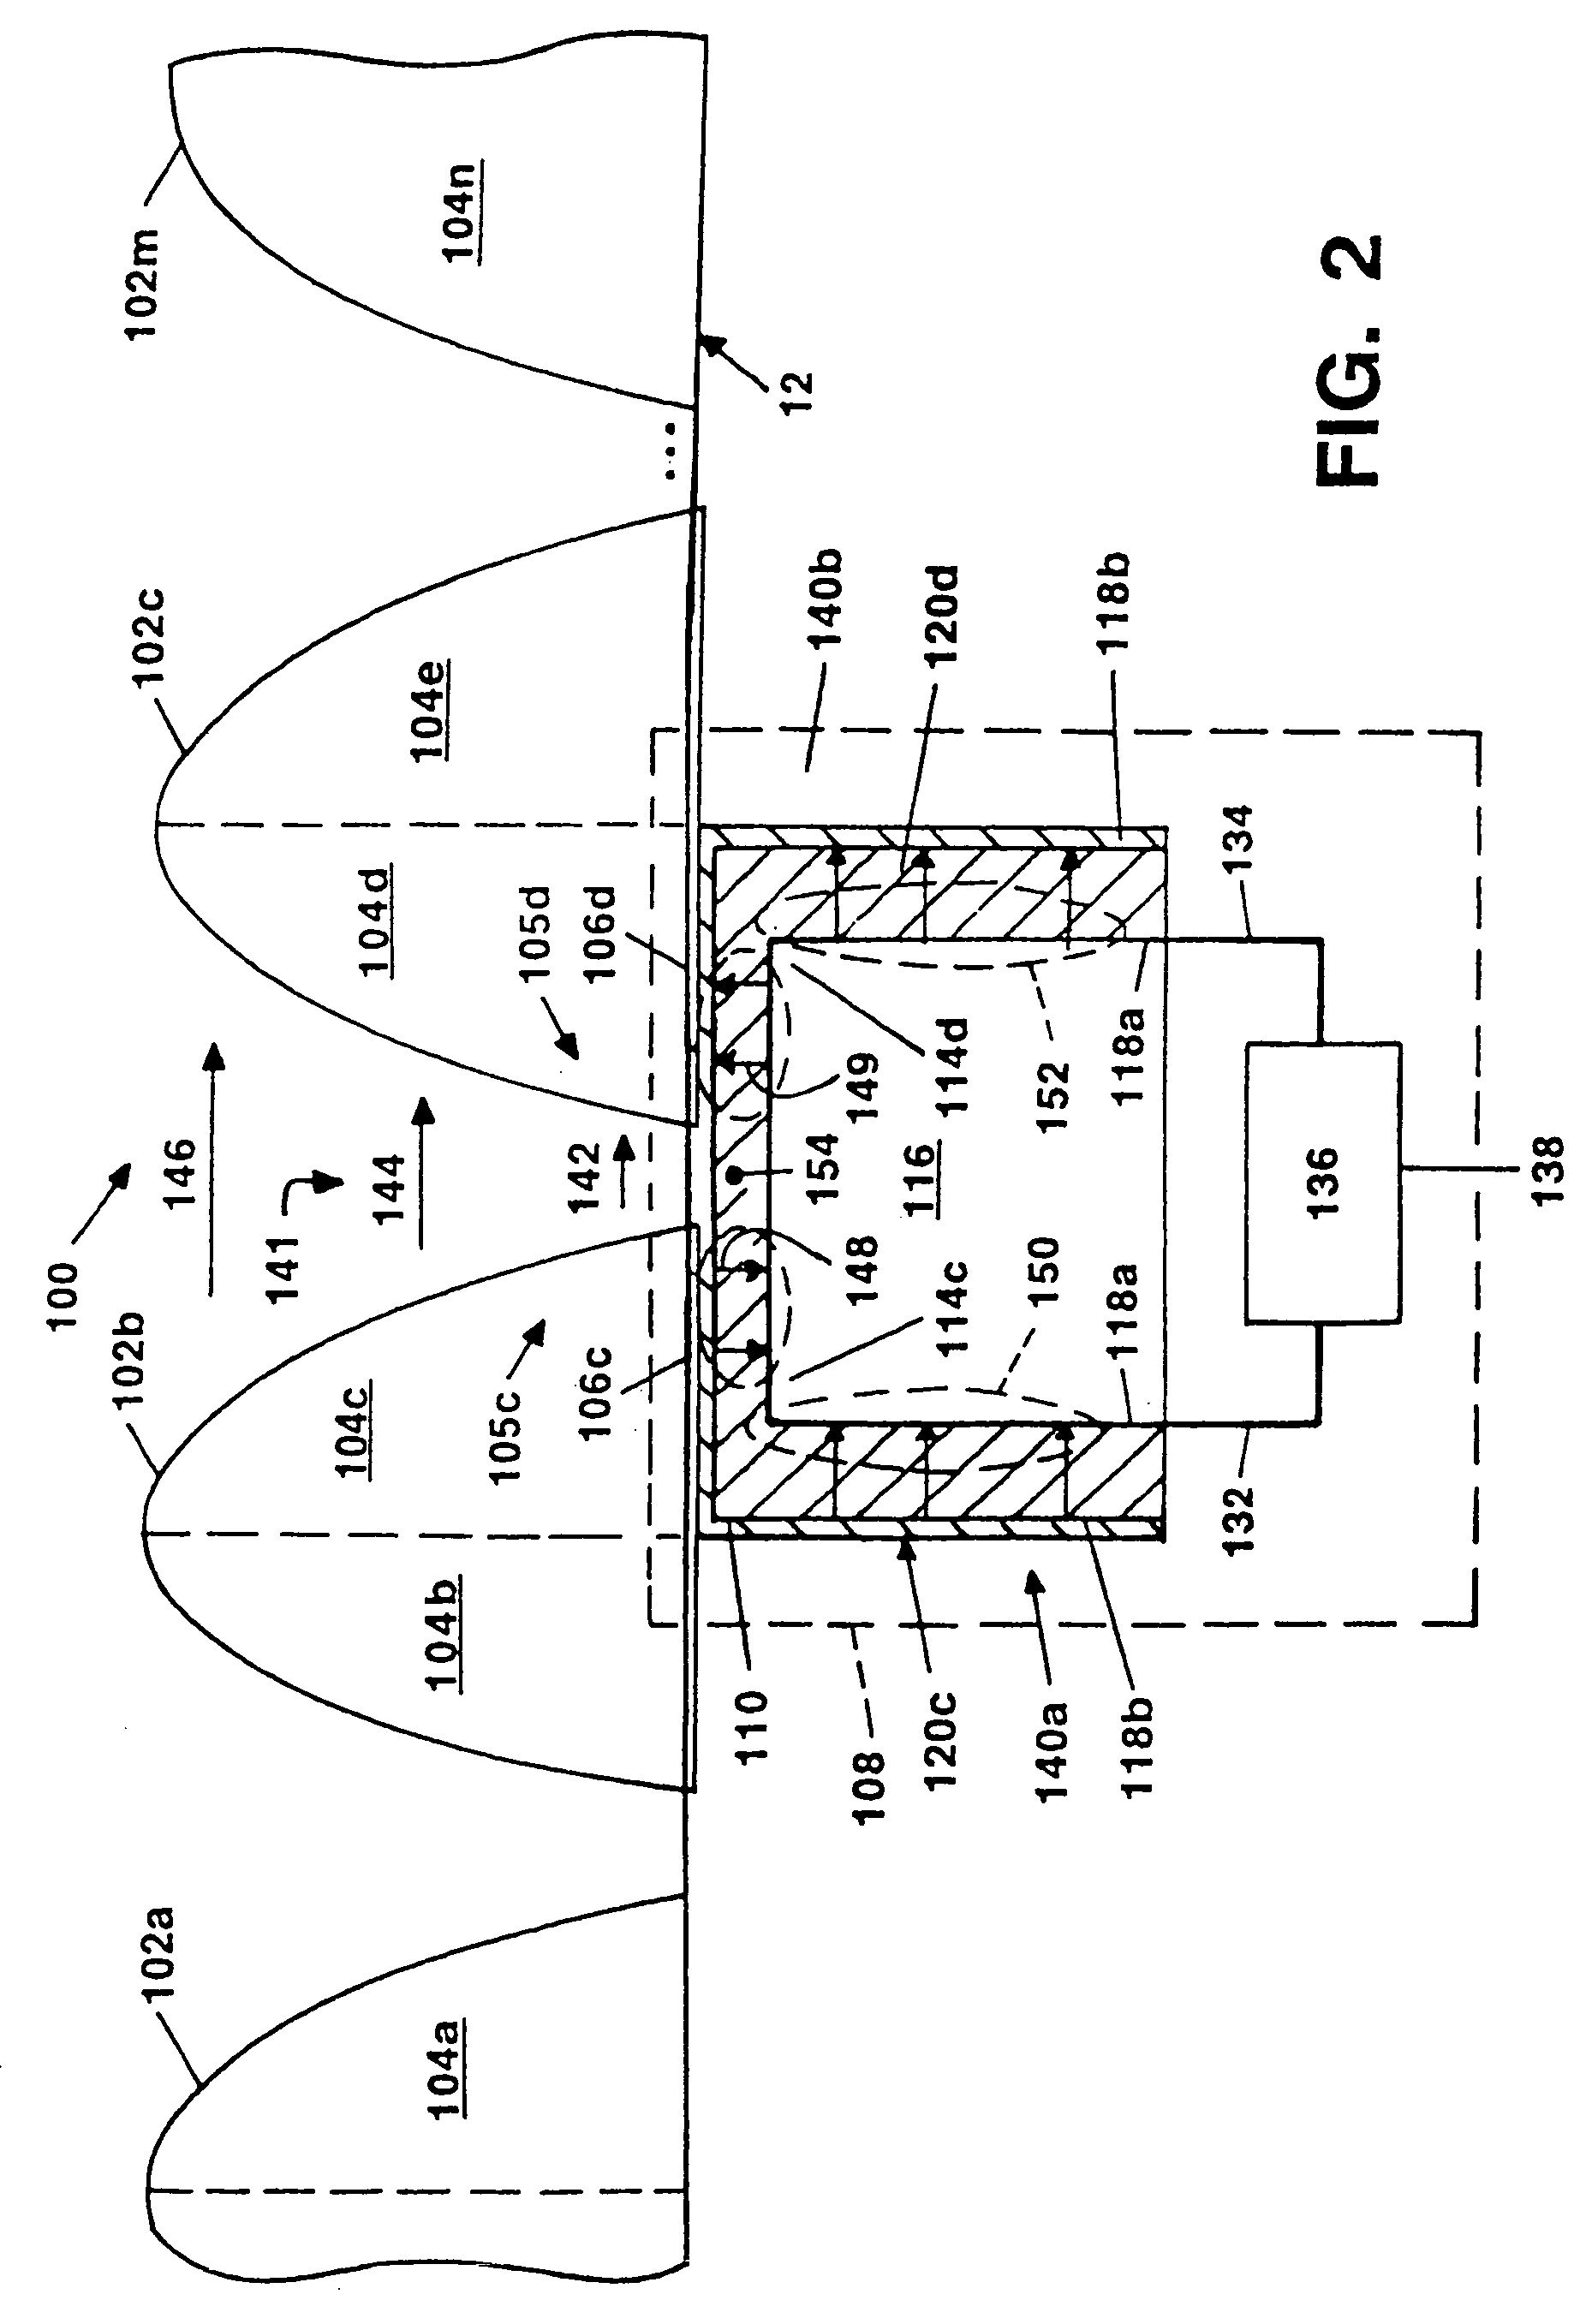 Wideband phased array radiator